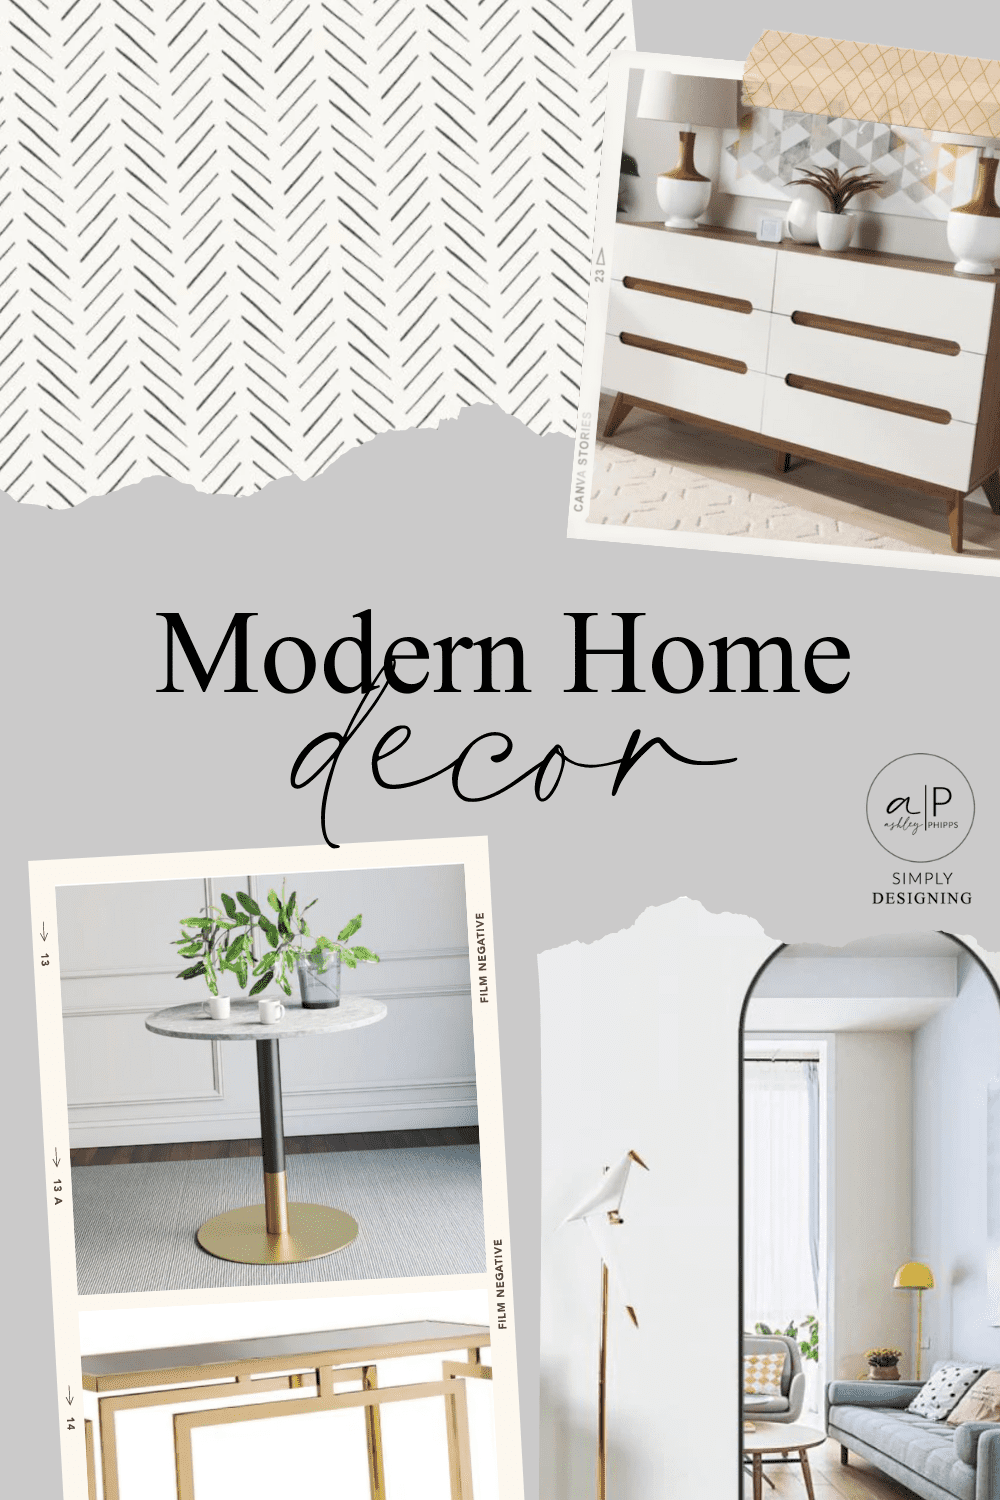 Modern Home Decor The Home Depot 16 Budget-Friendly Modern Home Decor Ideas 20 New Year's Resolutions